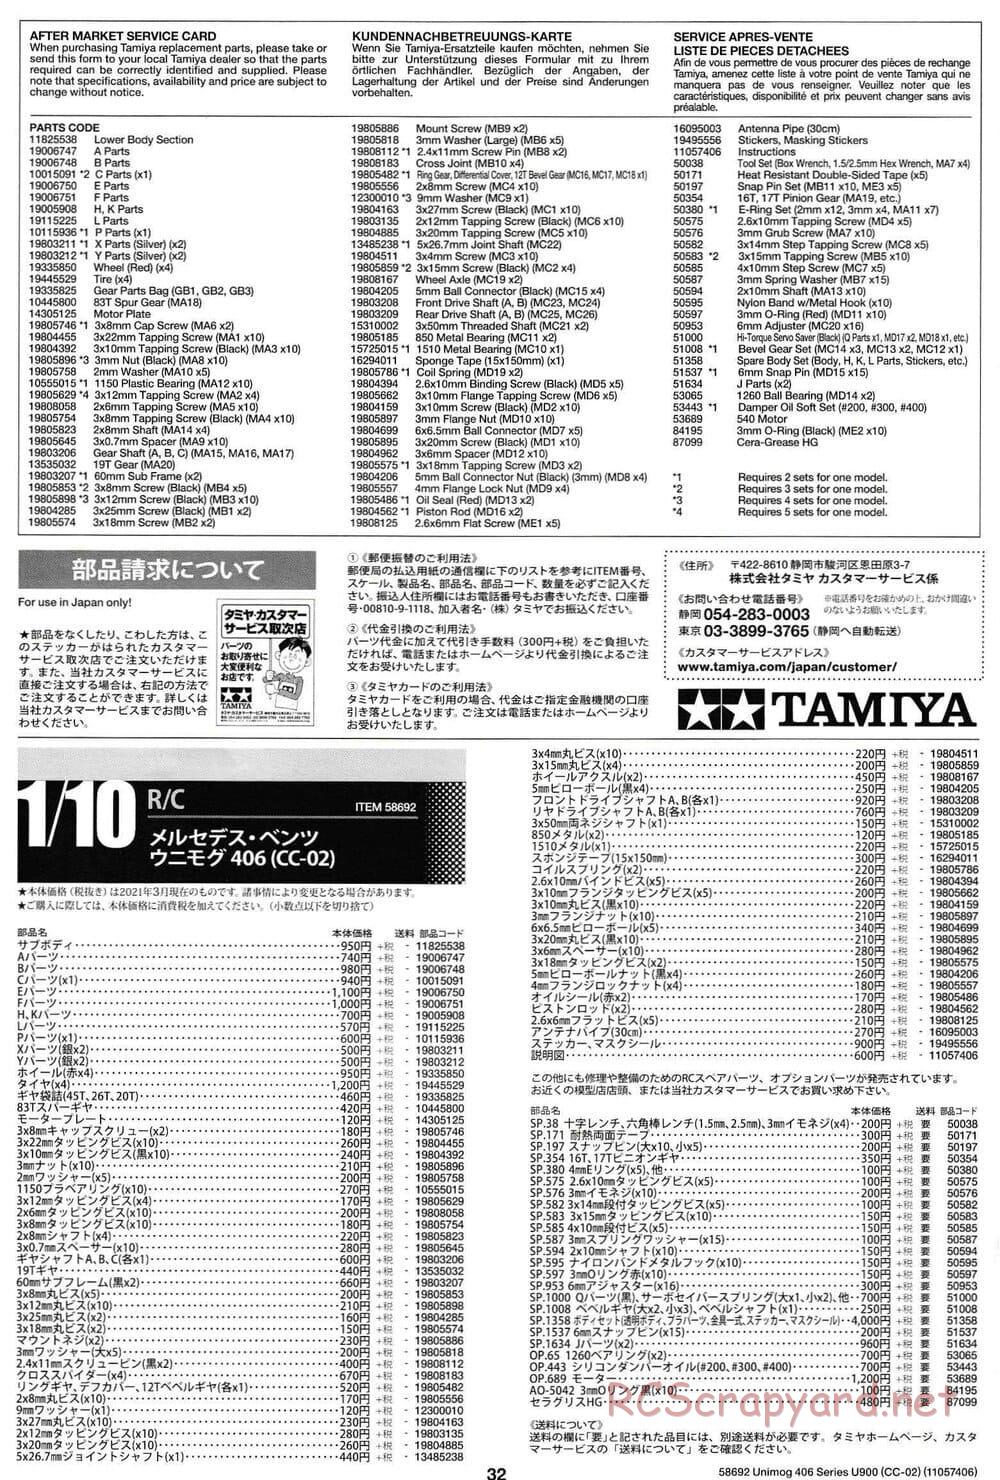 Tamiya - Mercedes-Benz Unimog 406 Series U900 - CC-02 Chassis - Manual - Page 32